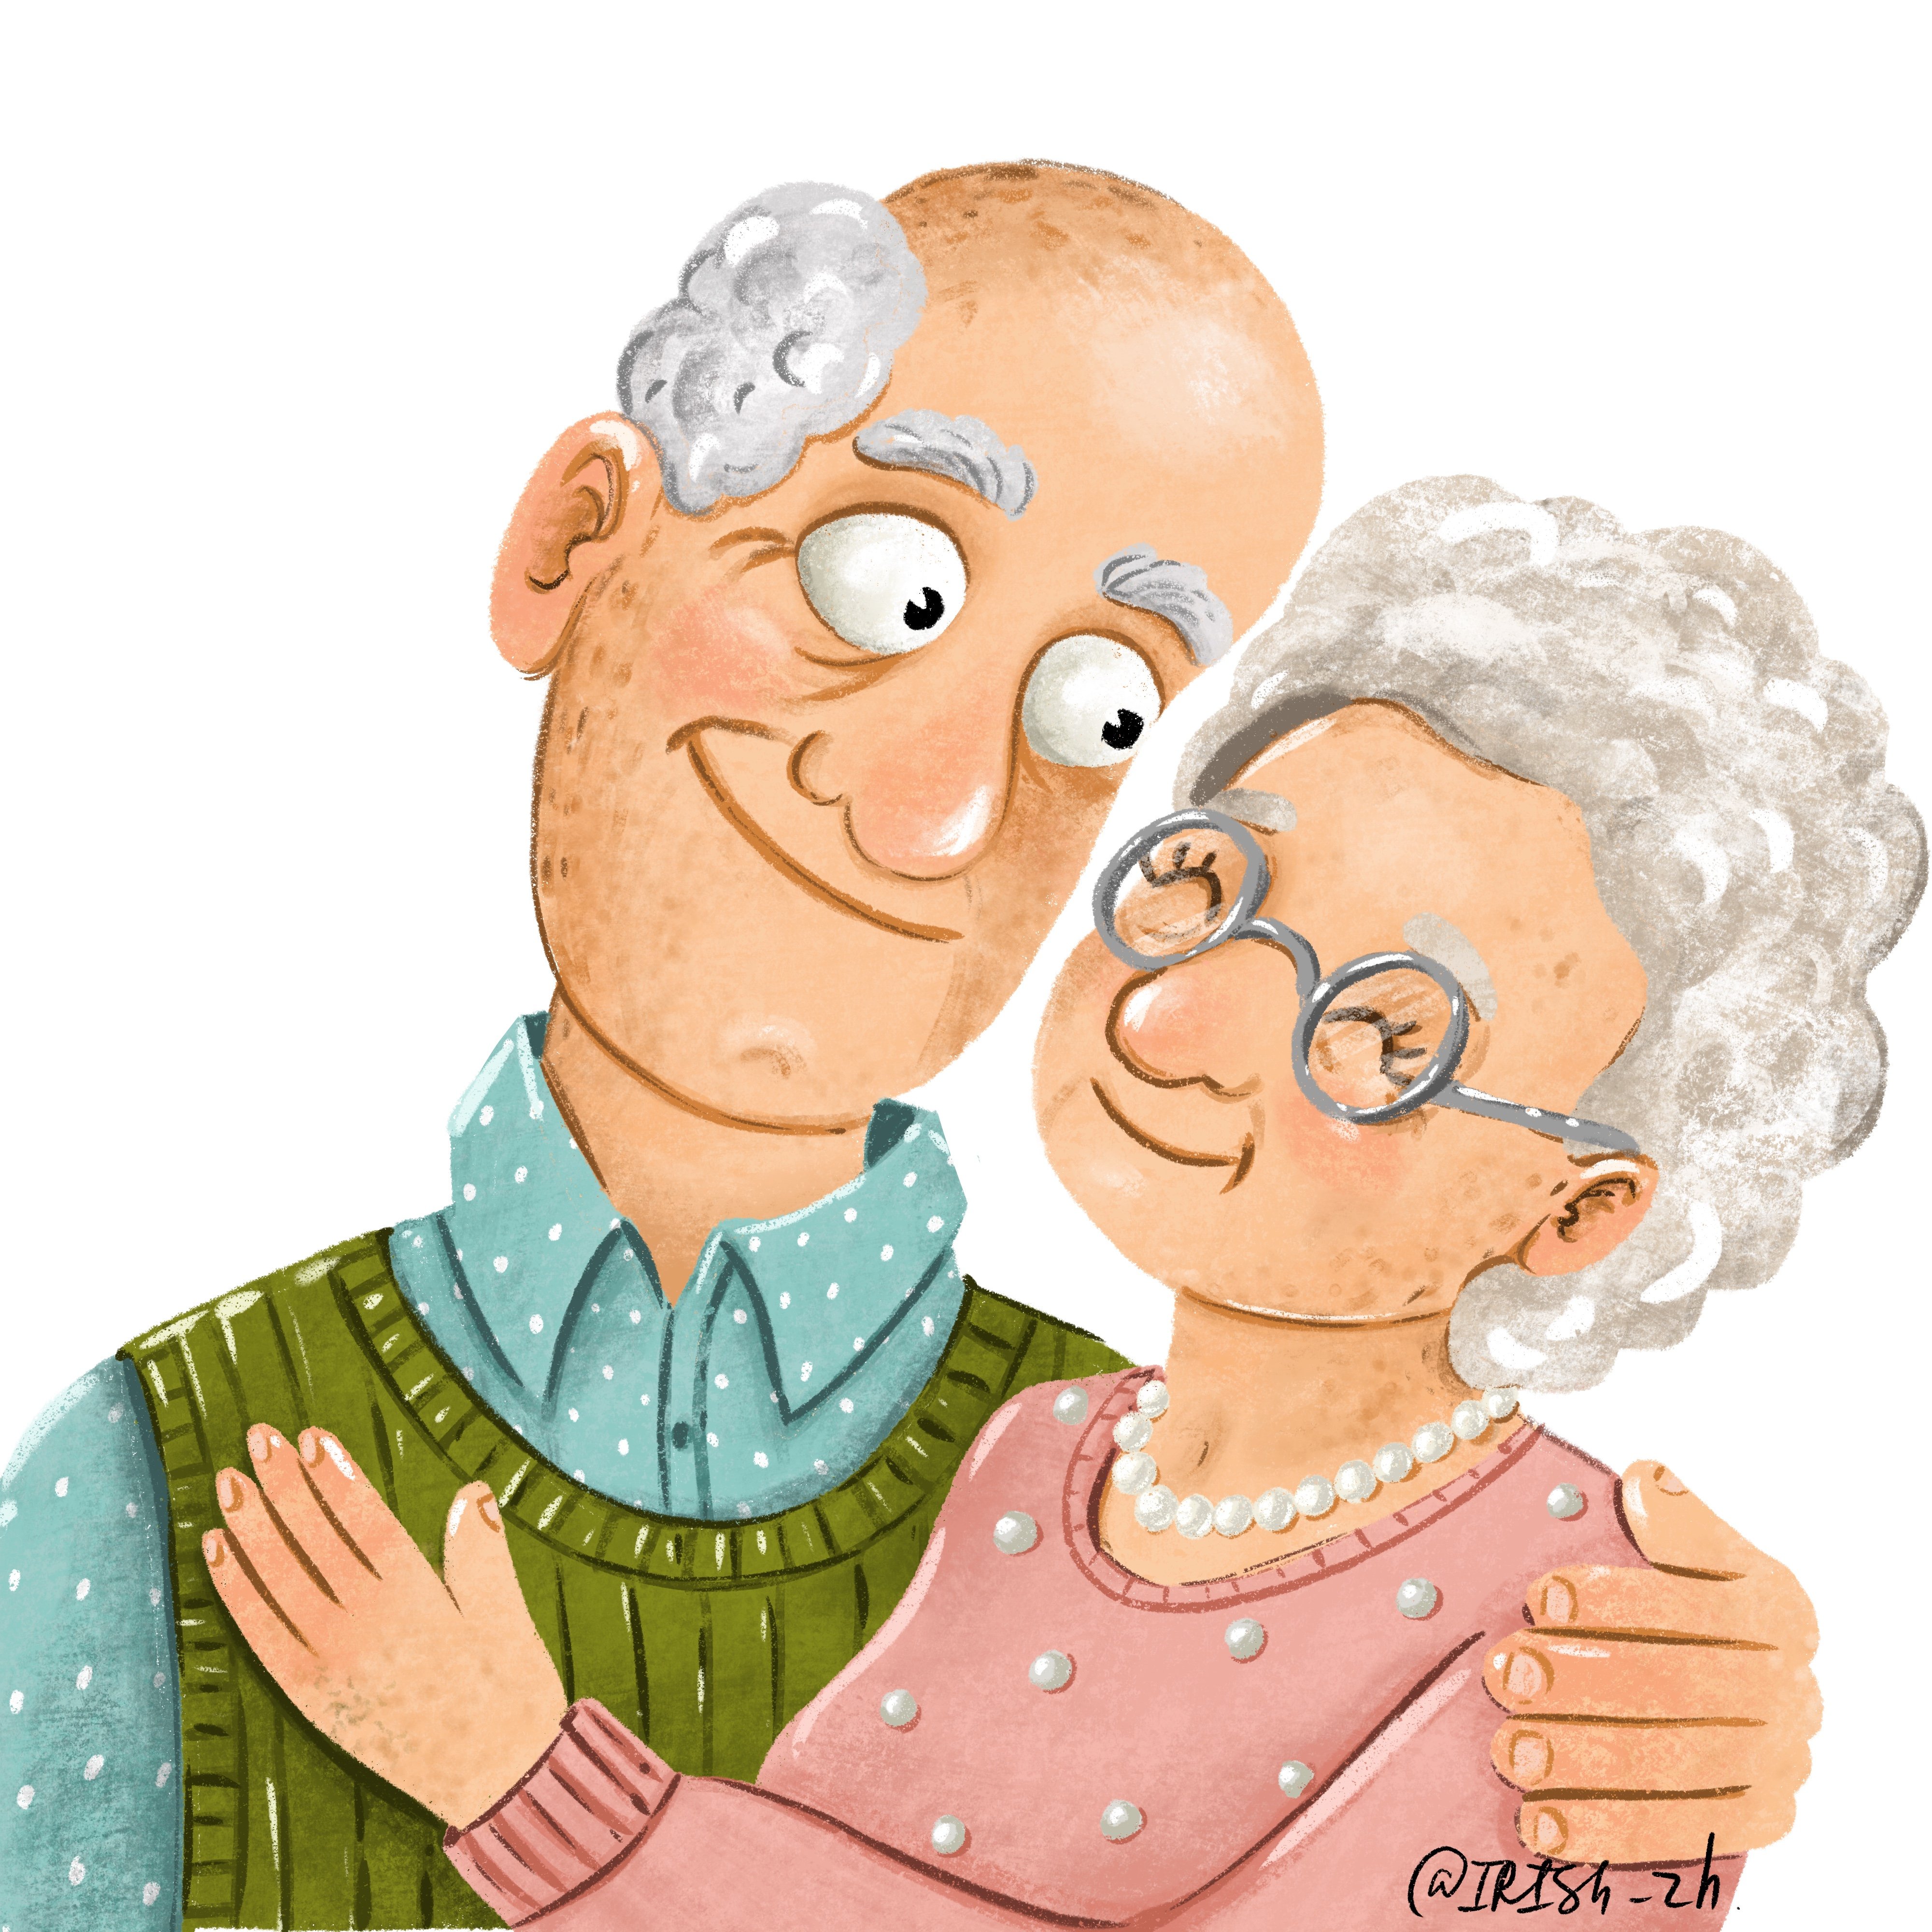 Картинка бабушка и дедушка. Бабушка и дедушка. Бабушка рядышком с дедушкой. Бабуля и дедуля. Бабушка и дедушка иллюстрация.